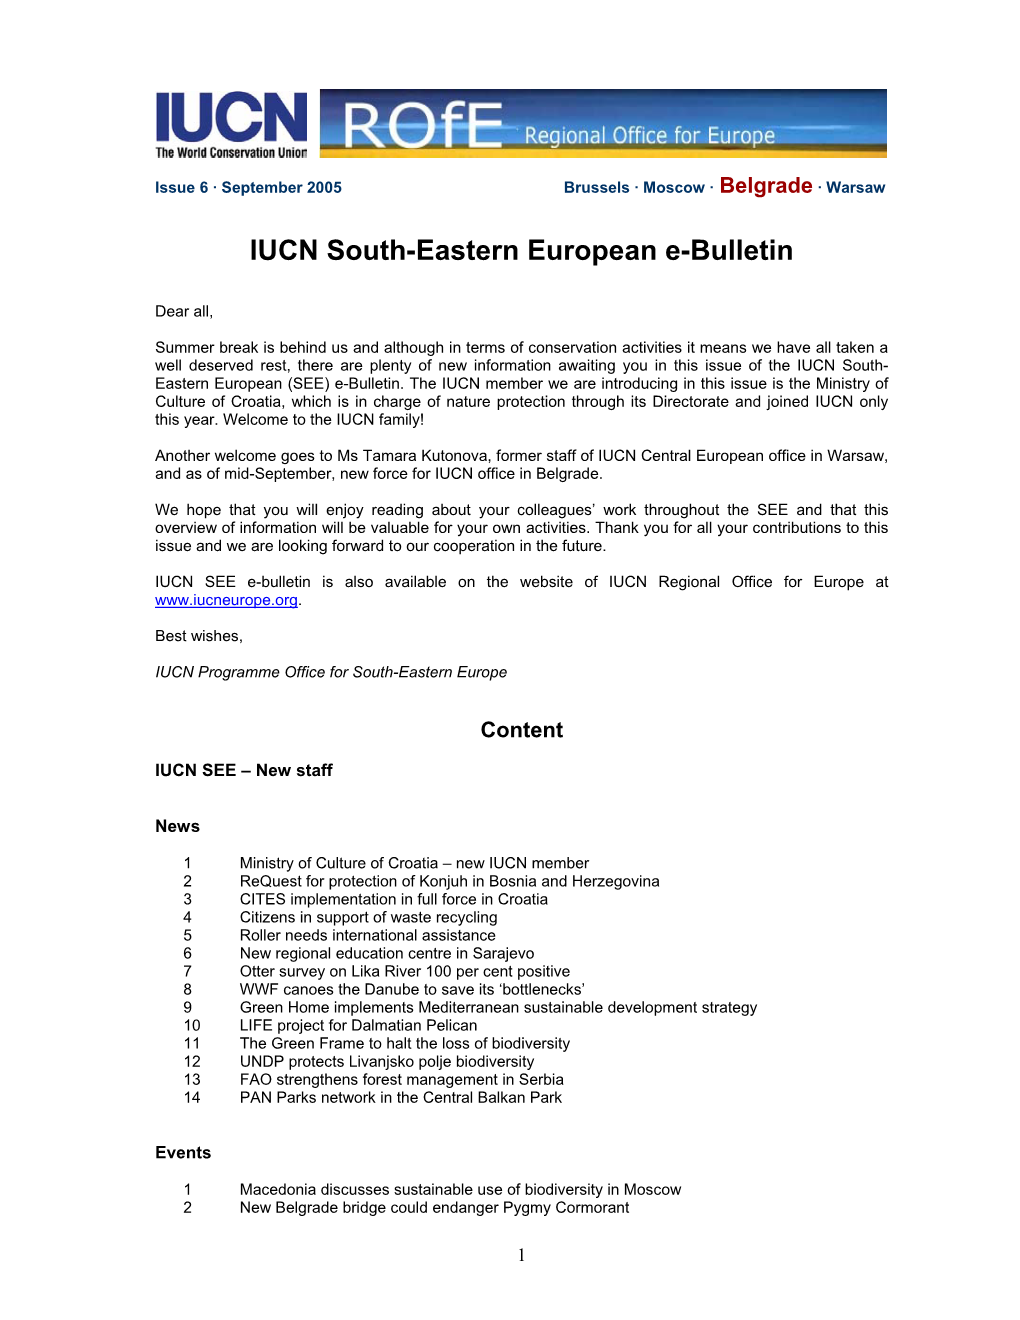 IUCN South-Eastern European E-Bulletin 6